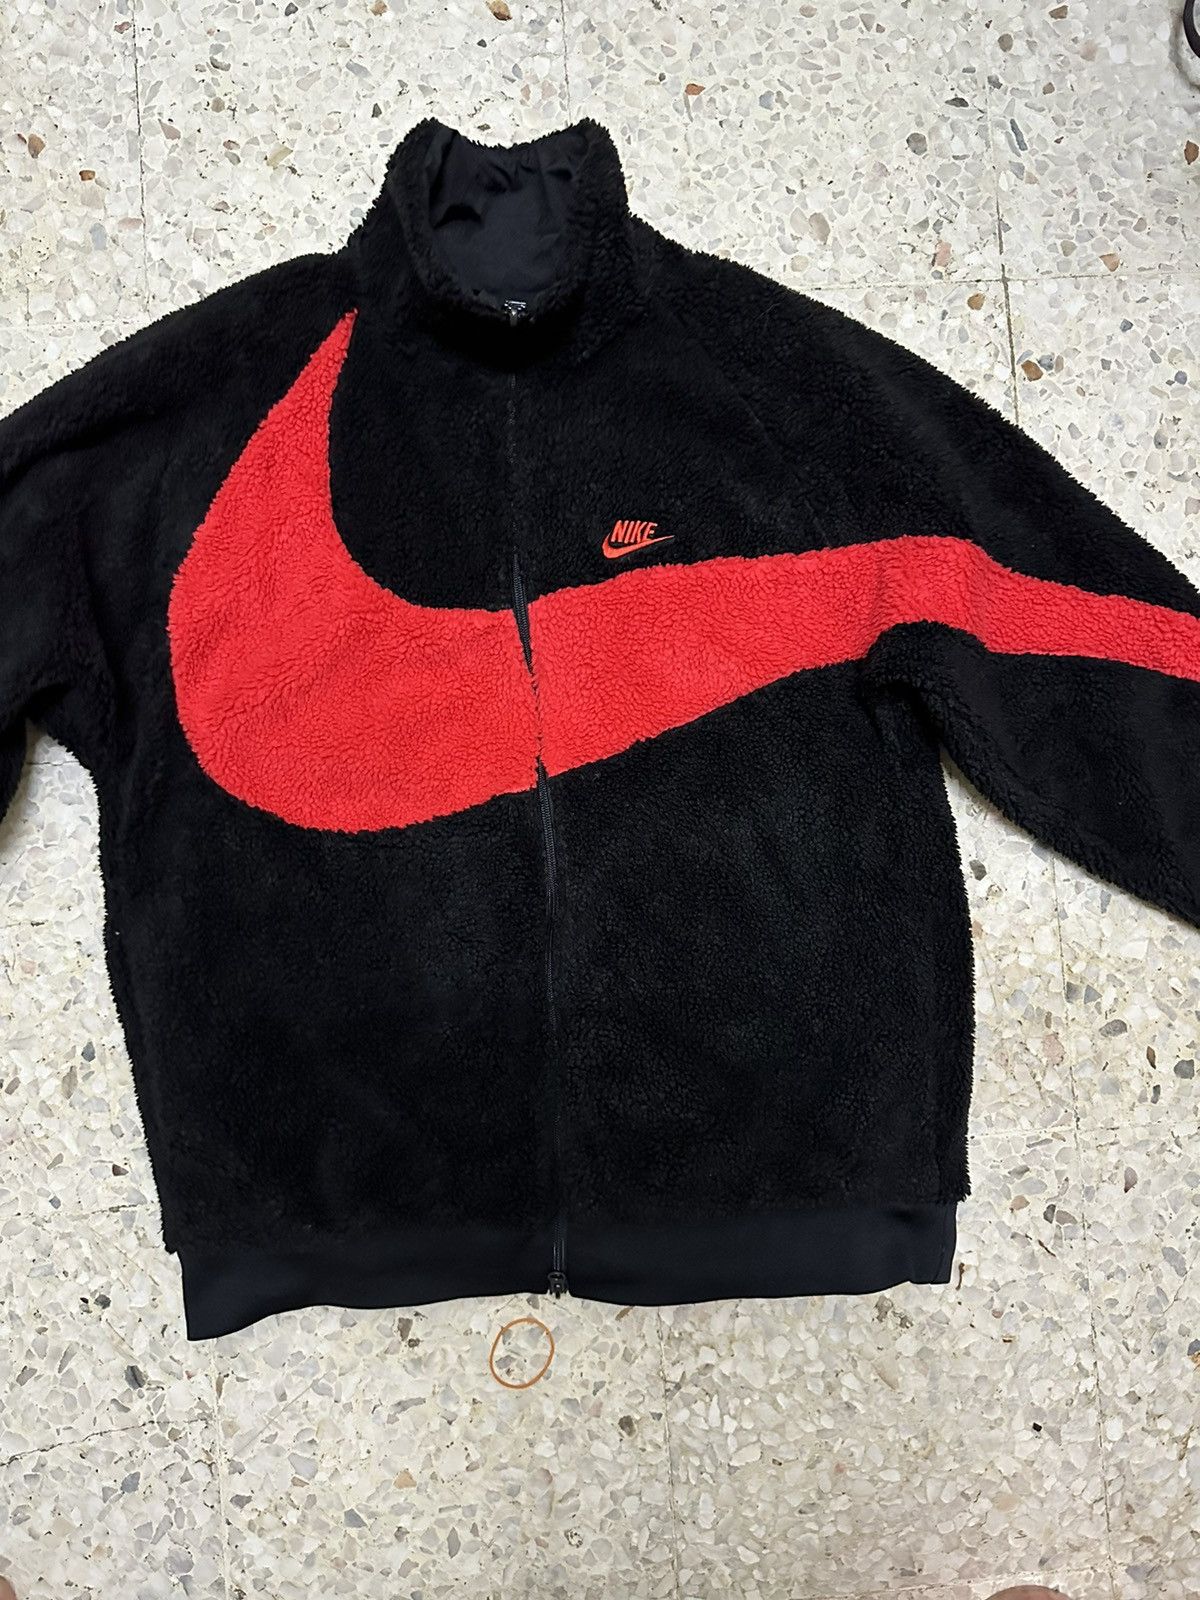 Rare Nike Sherpa Jacket Riversible Big Swoosh Design - 4